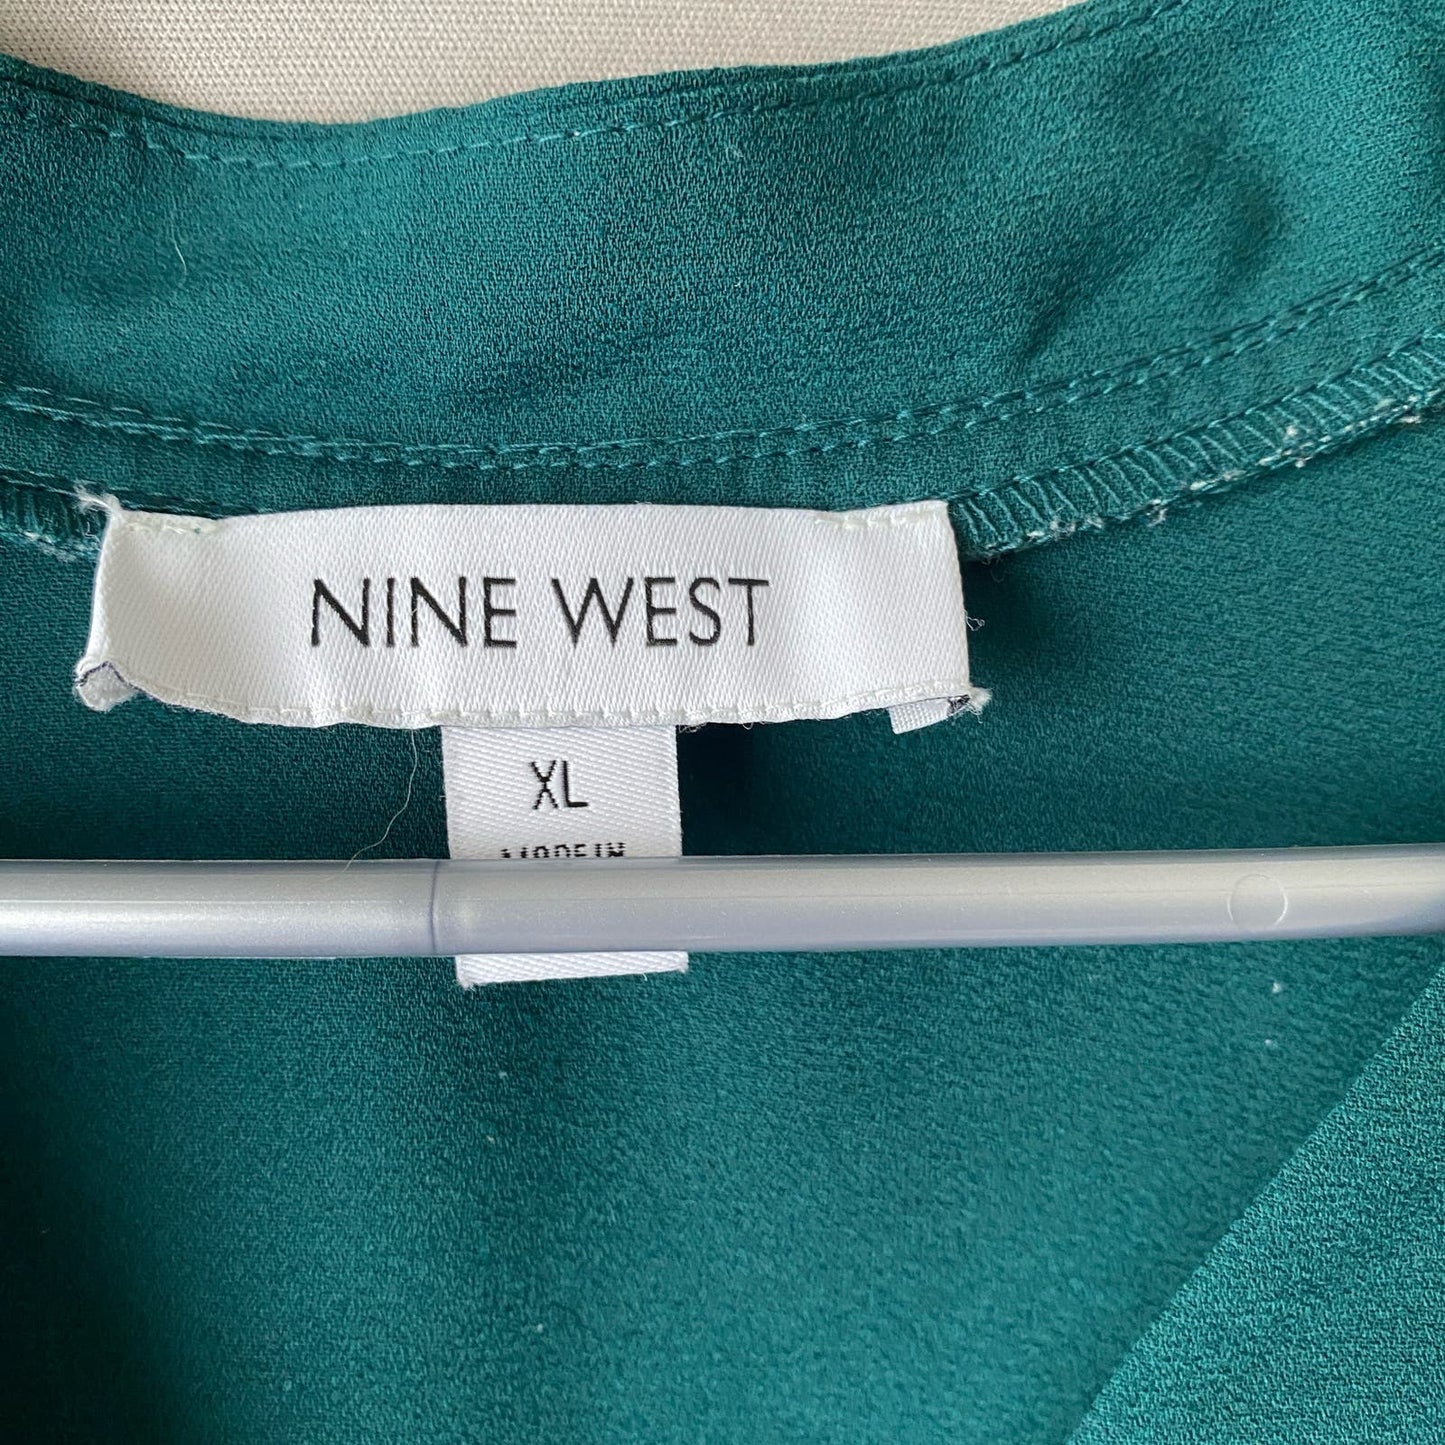 Nine West sz XL green work career blouse